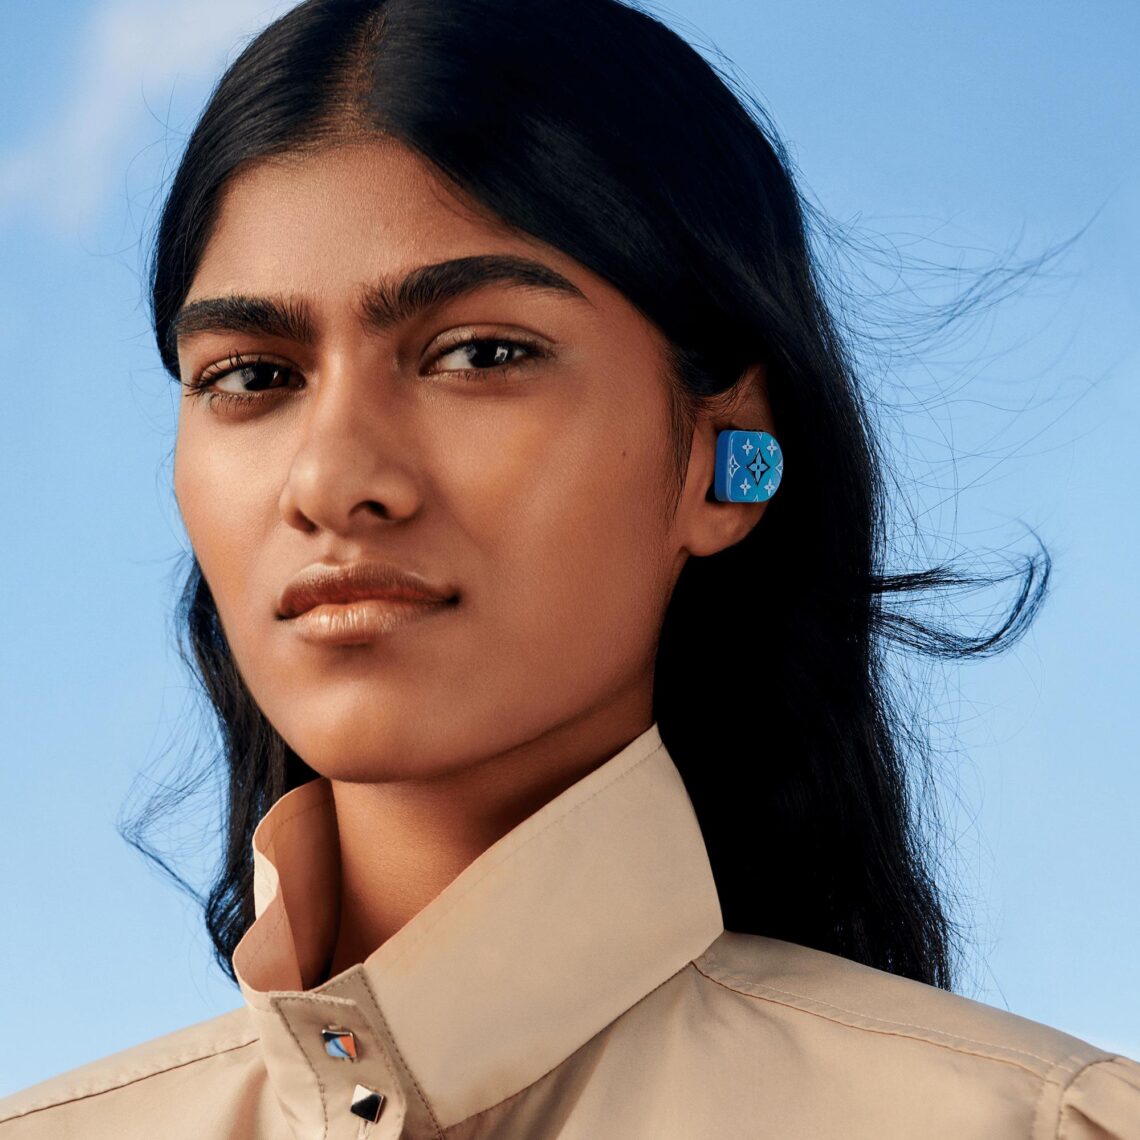 Louis Vuitton disponibiliza no Brasil fone de ouvido de luxo com